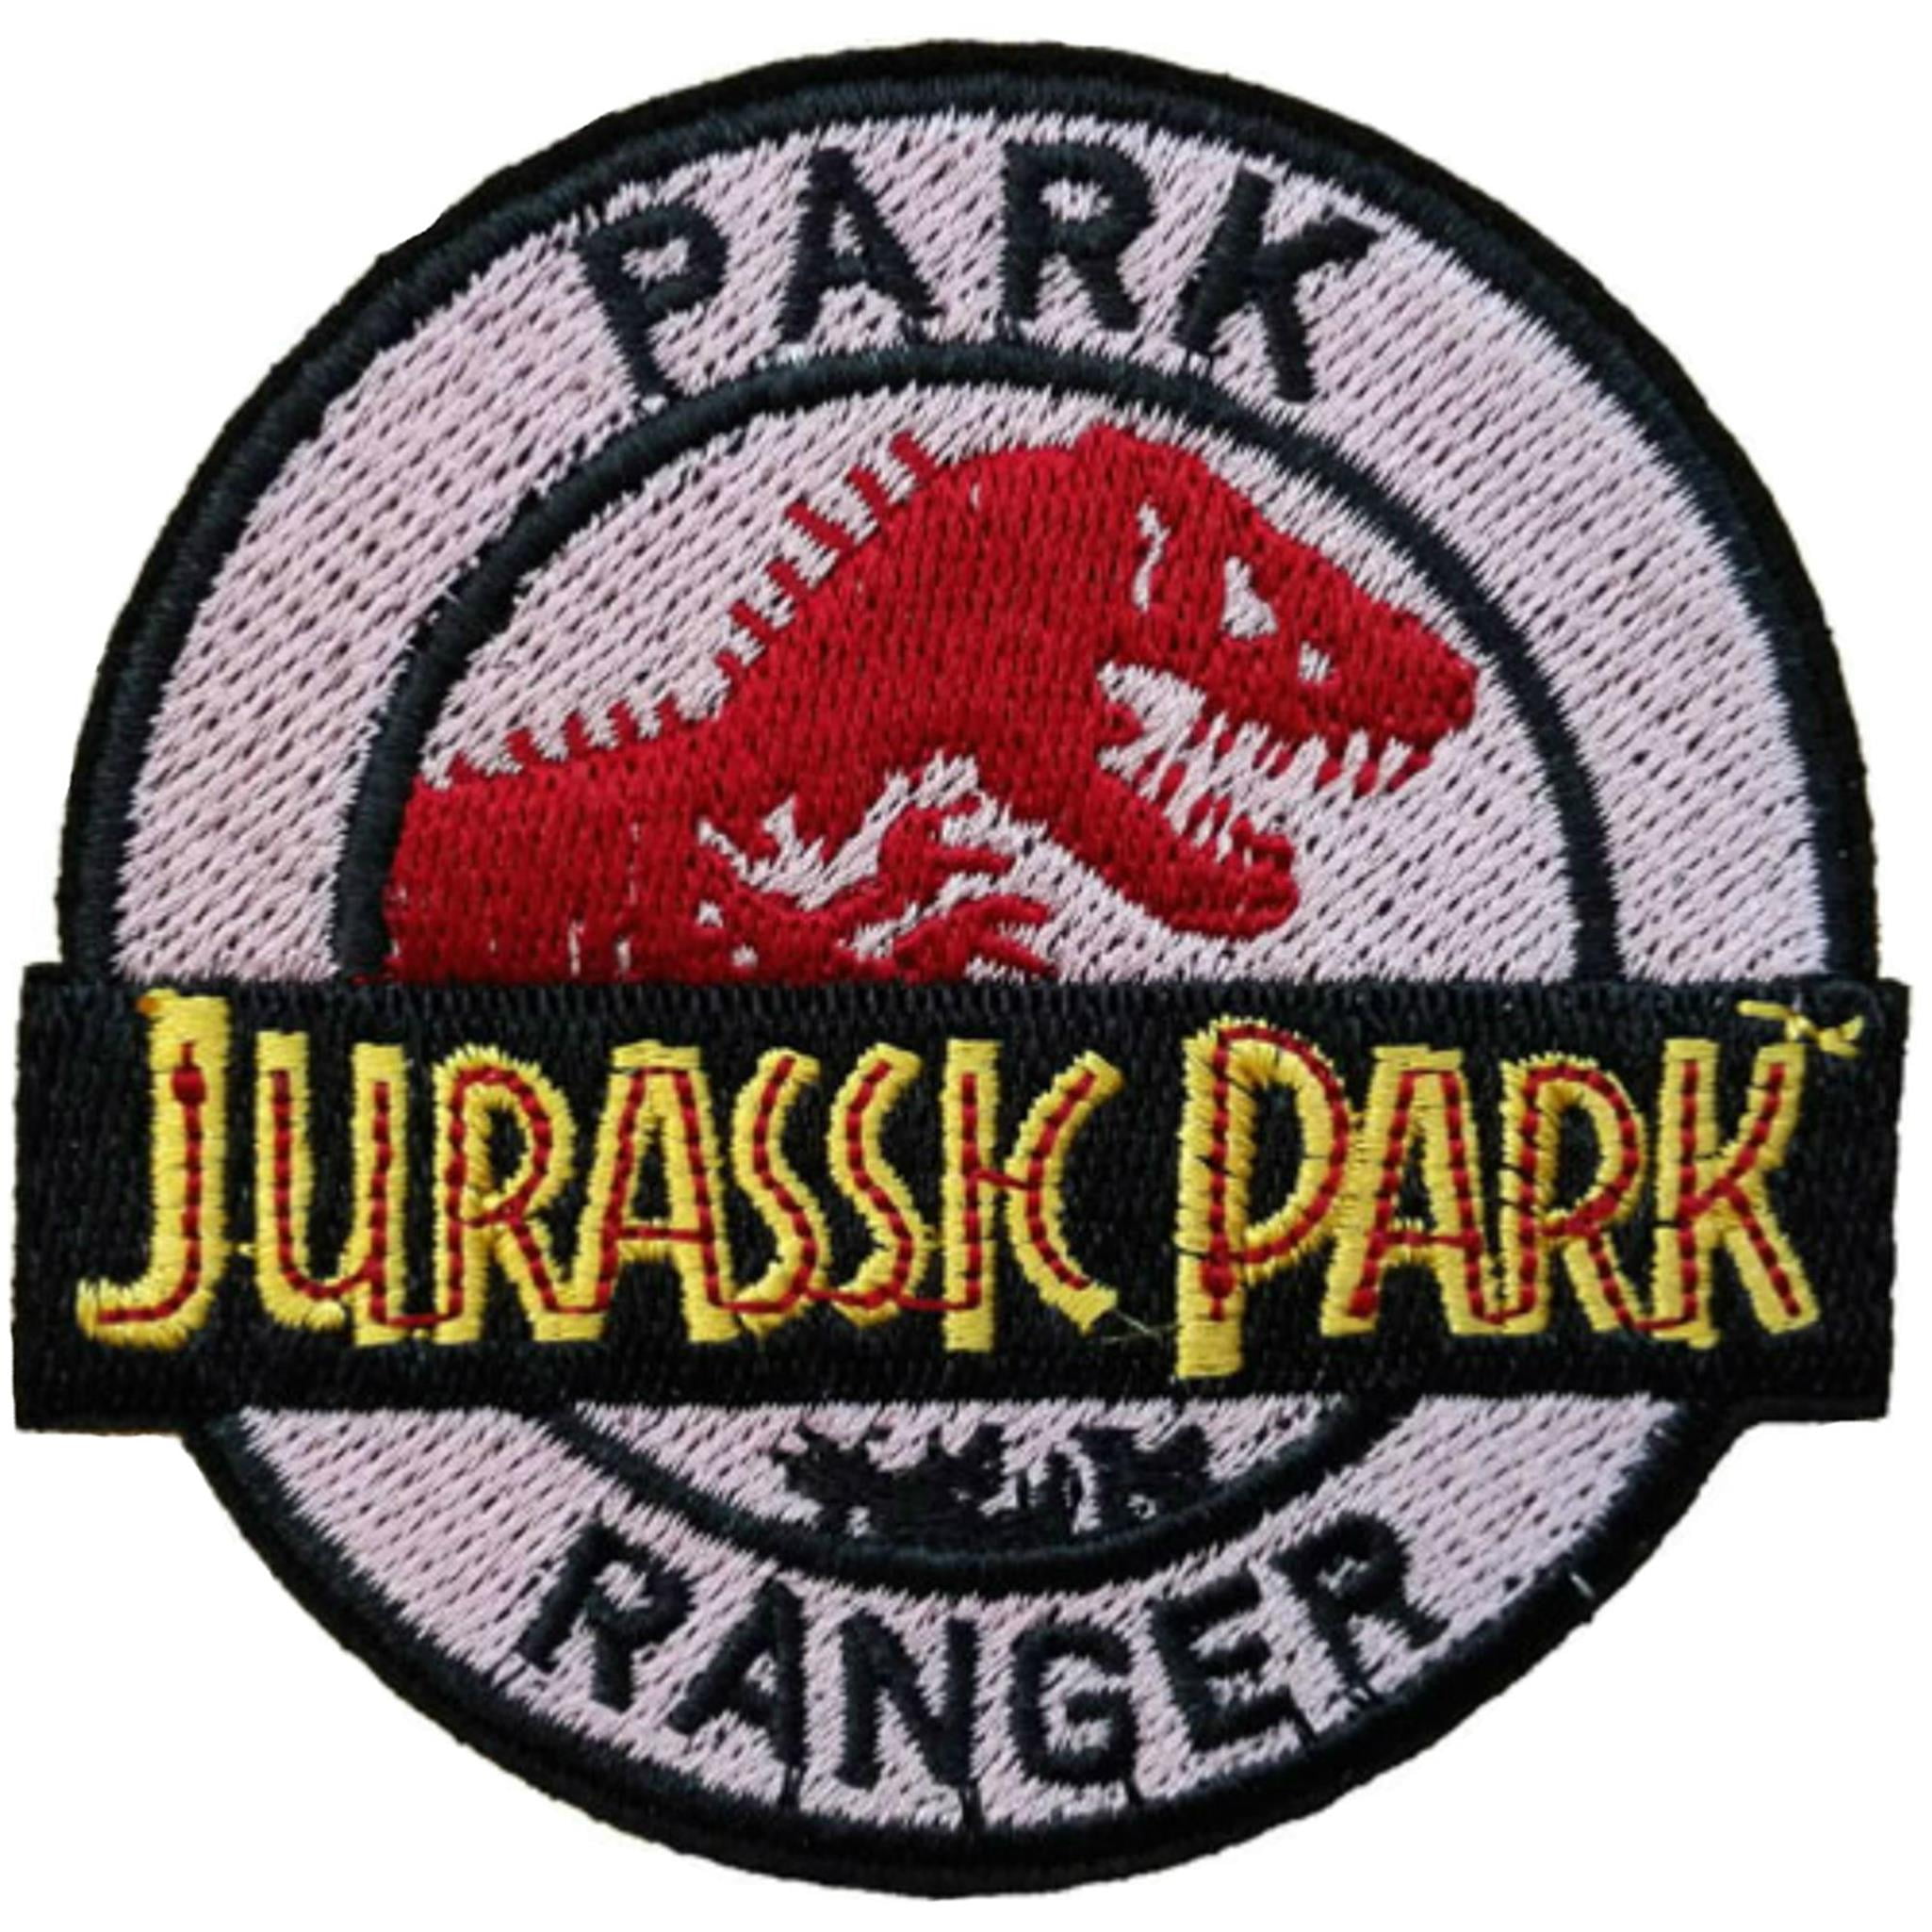 Jurassic Park ID Badge and Patch Set-Park Ranger Dinosaur Expert cosplay 